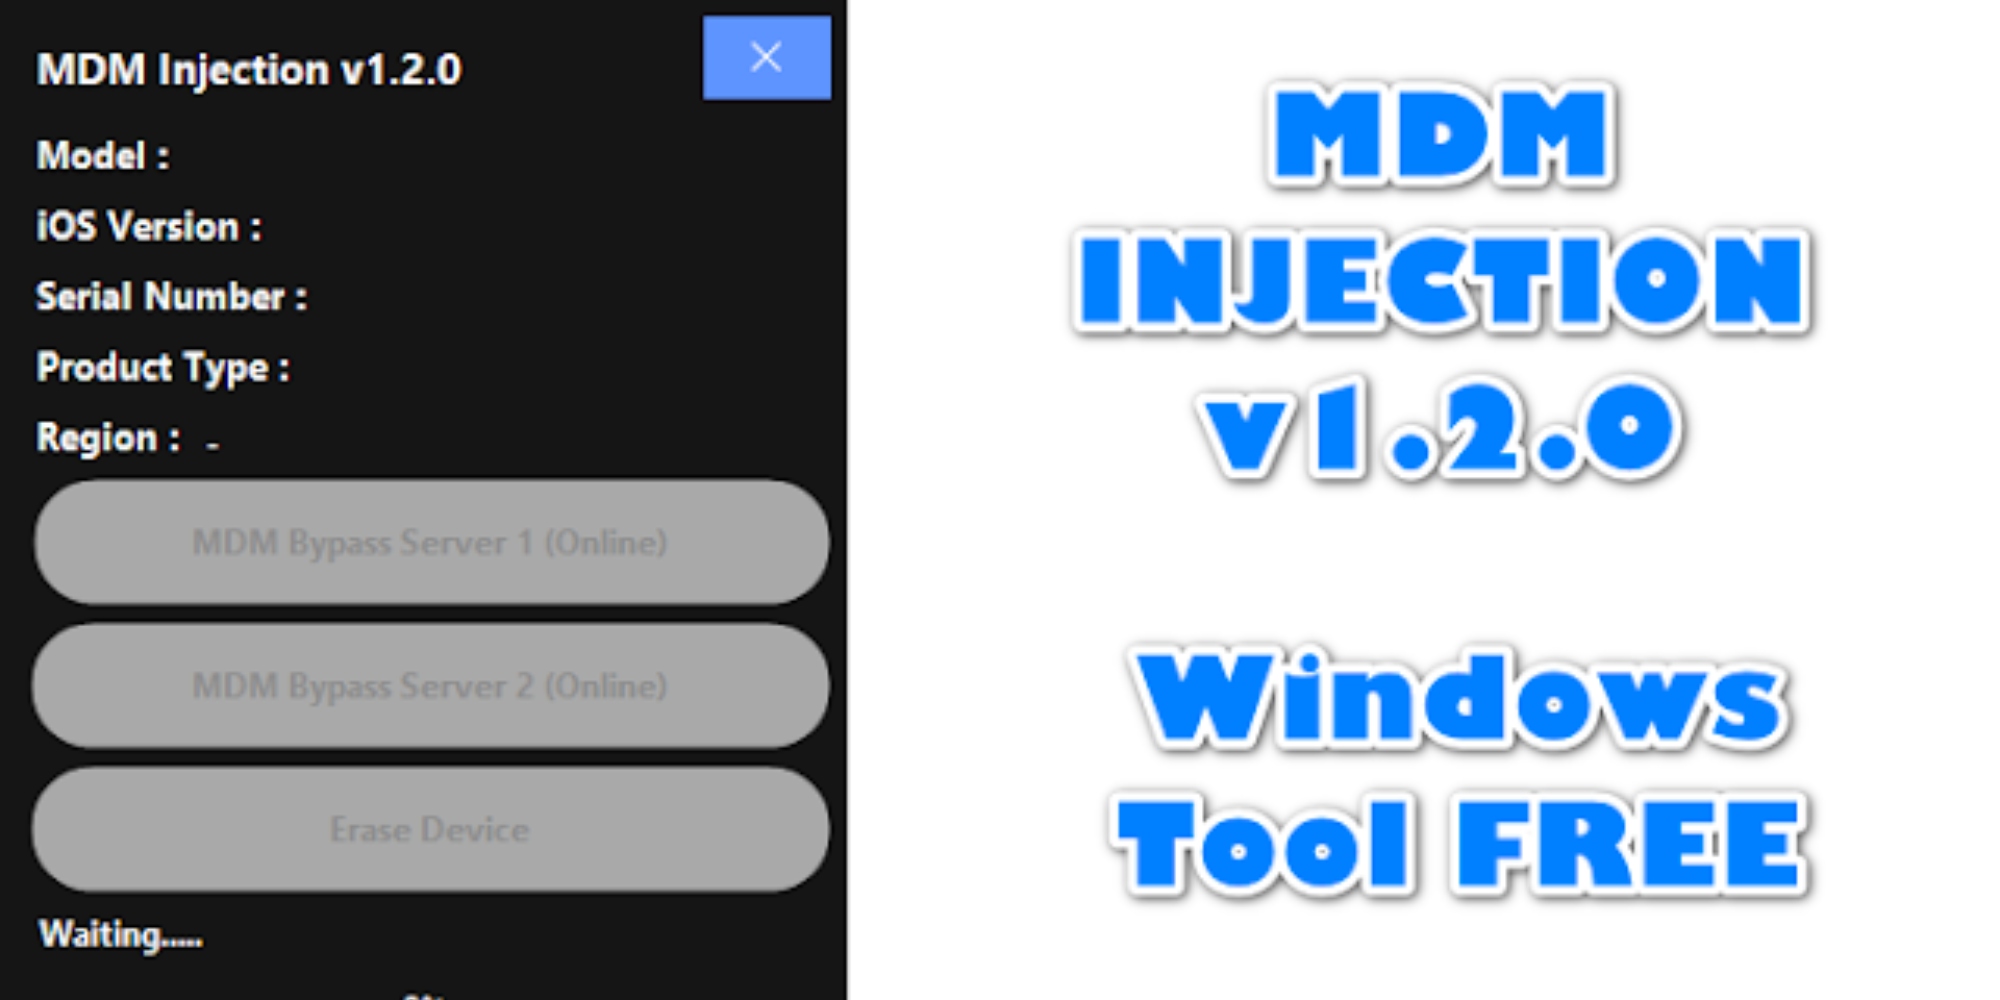 MDM Injection 1.2.0